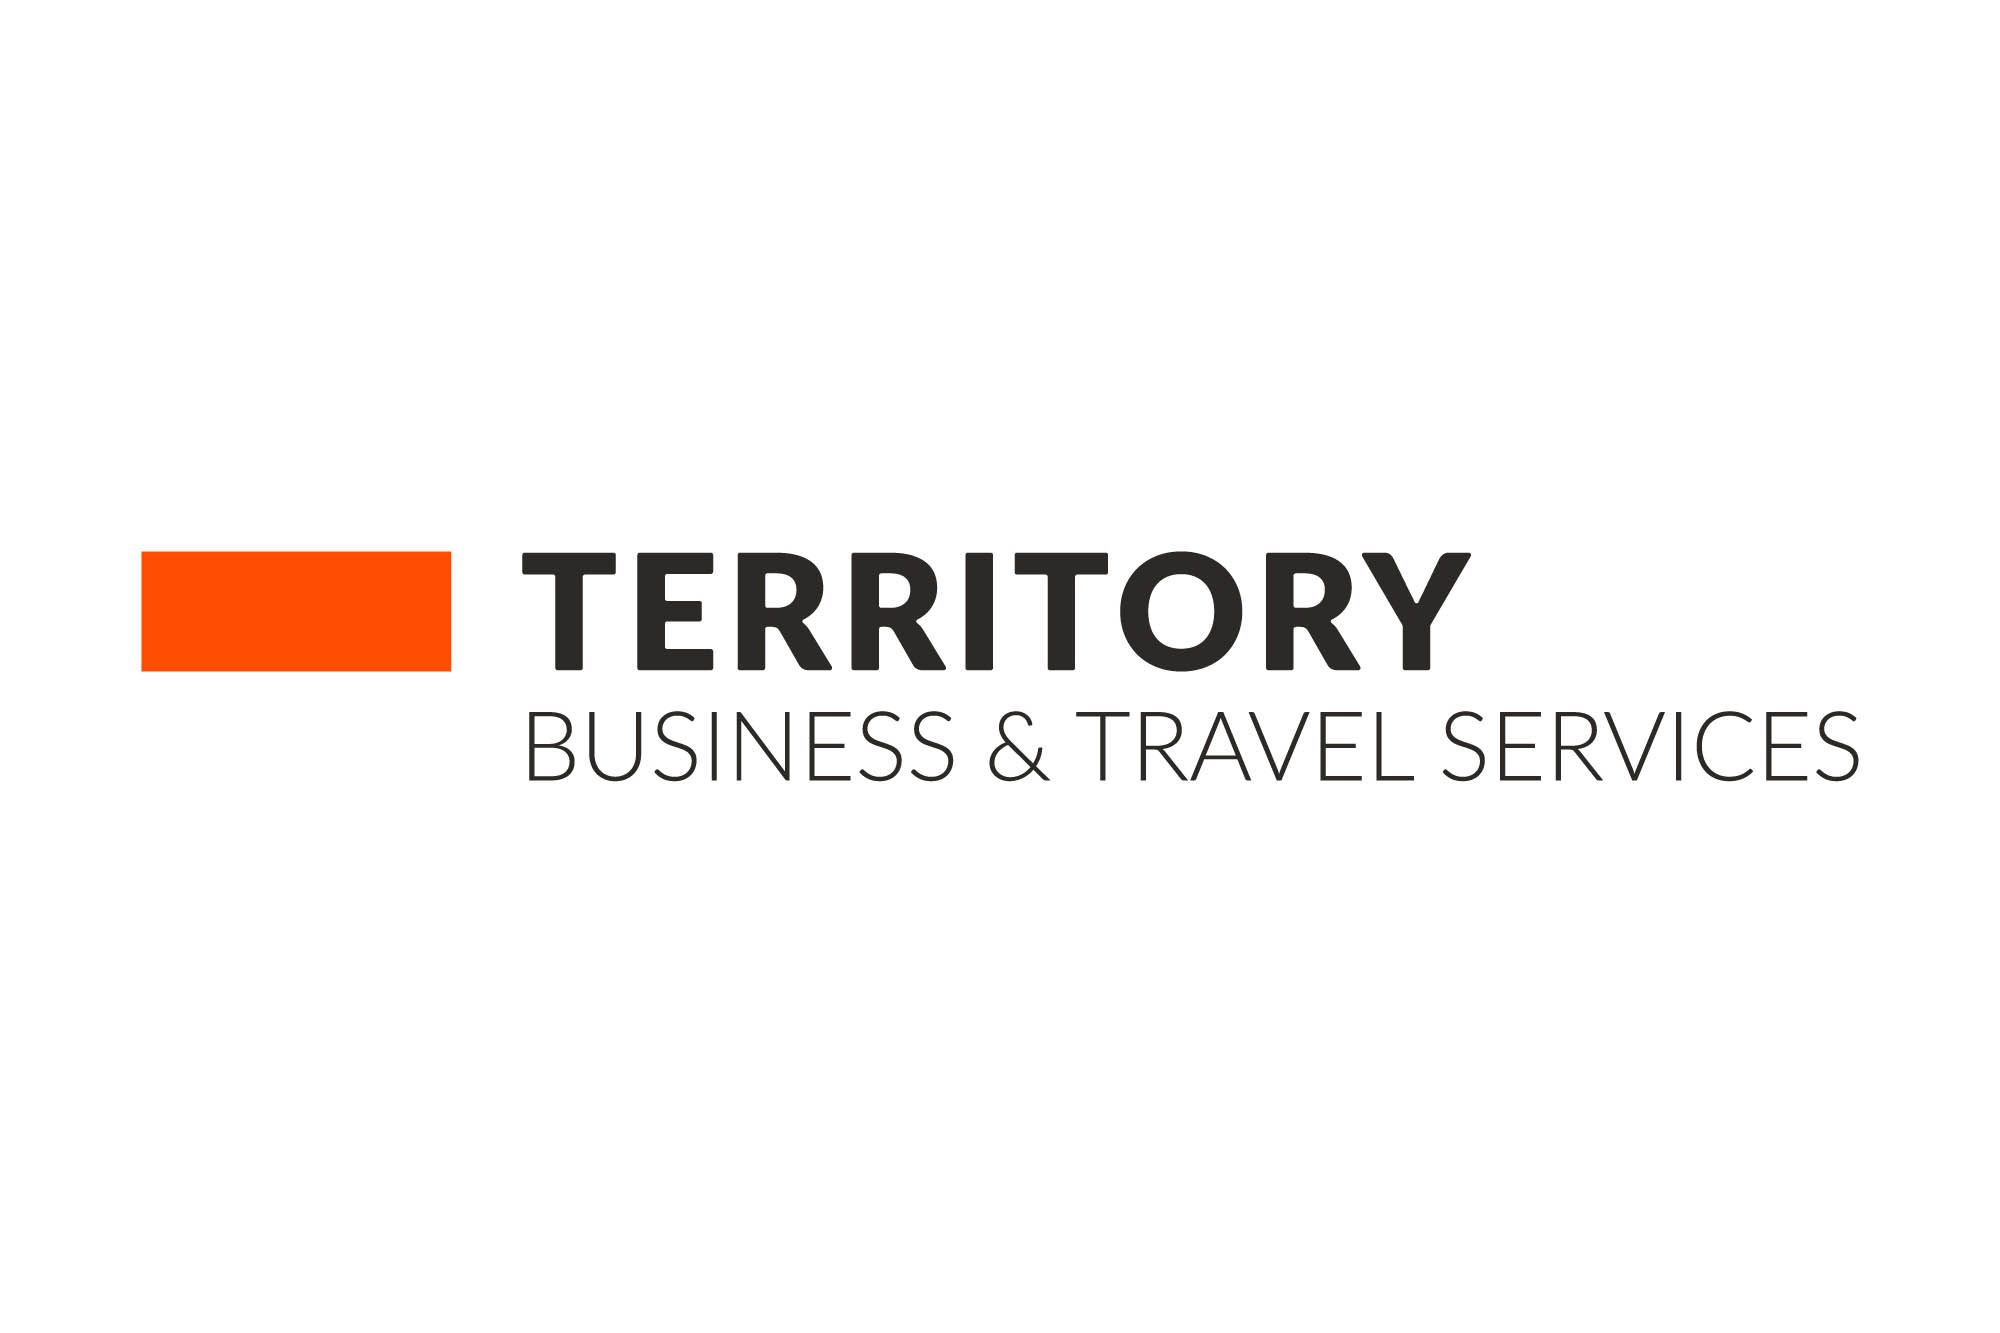 Territory business & travel